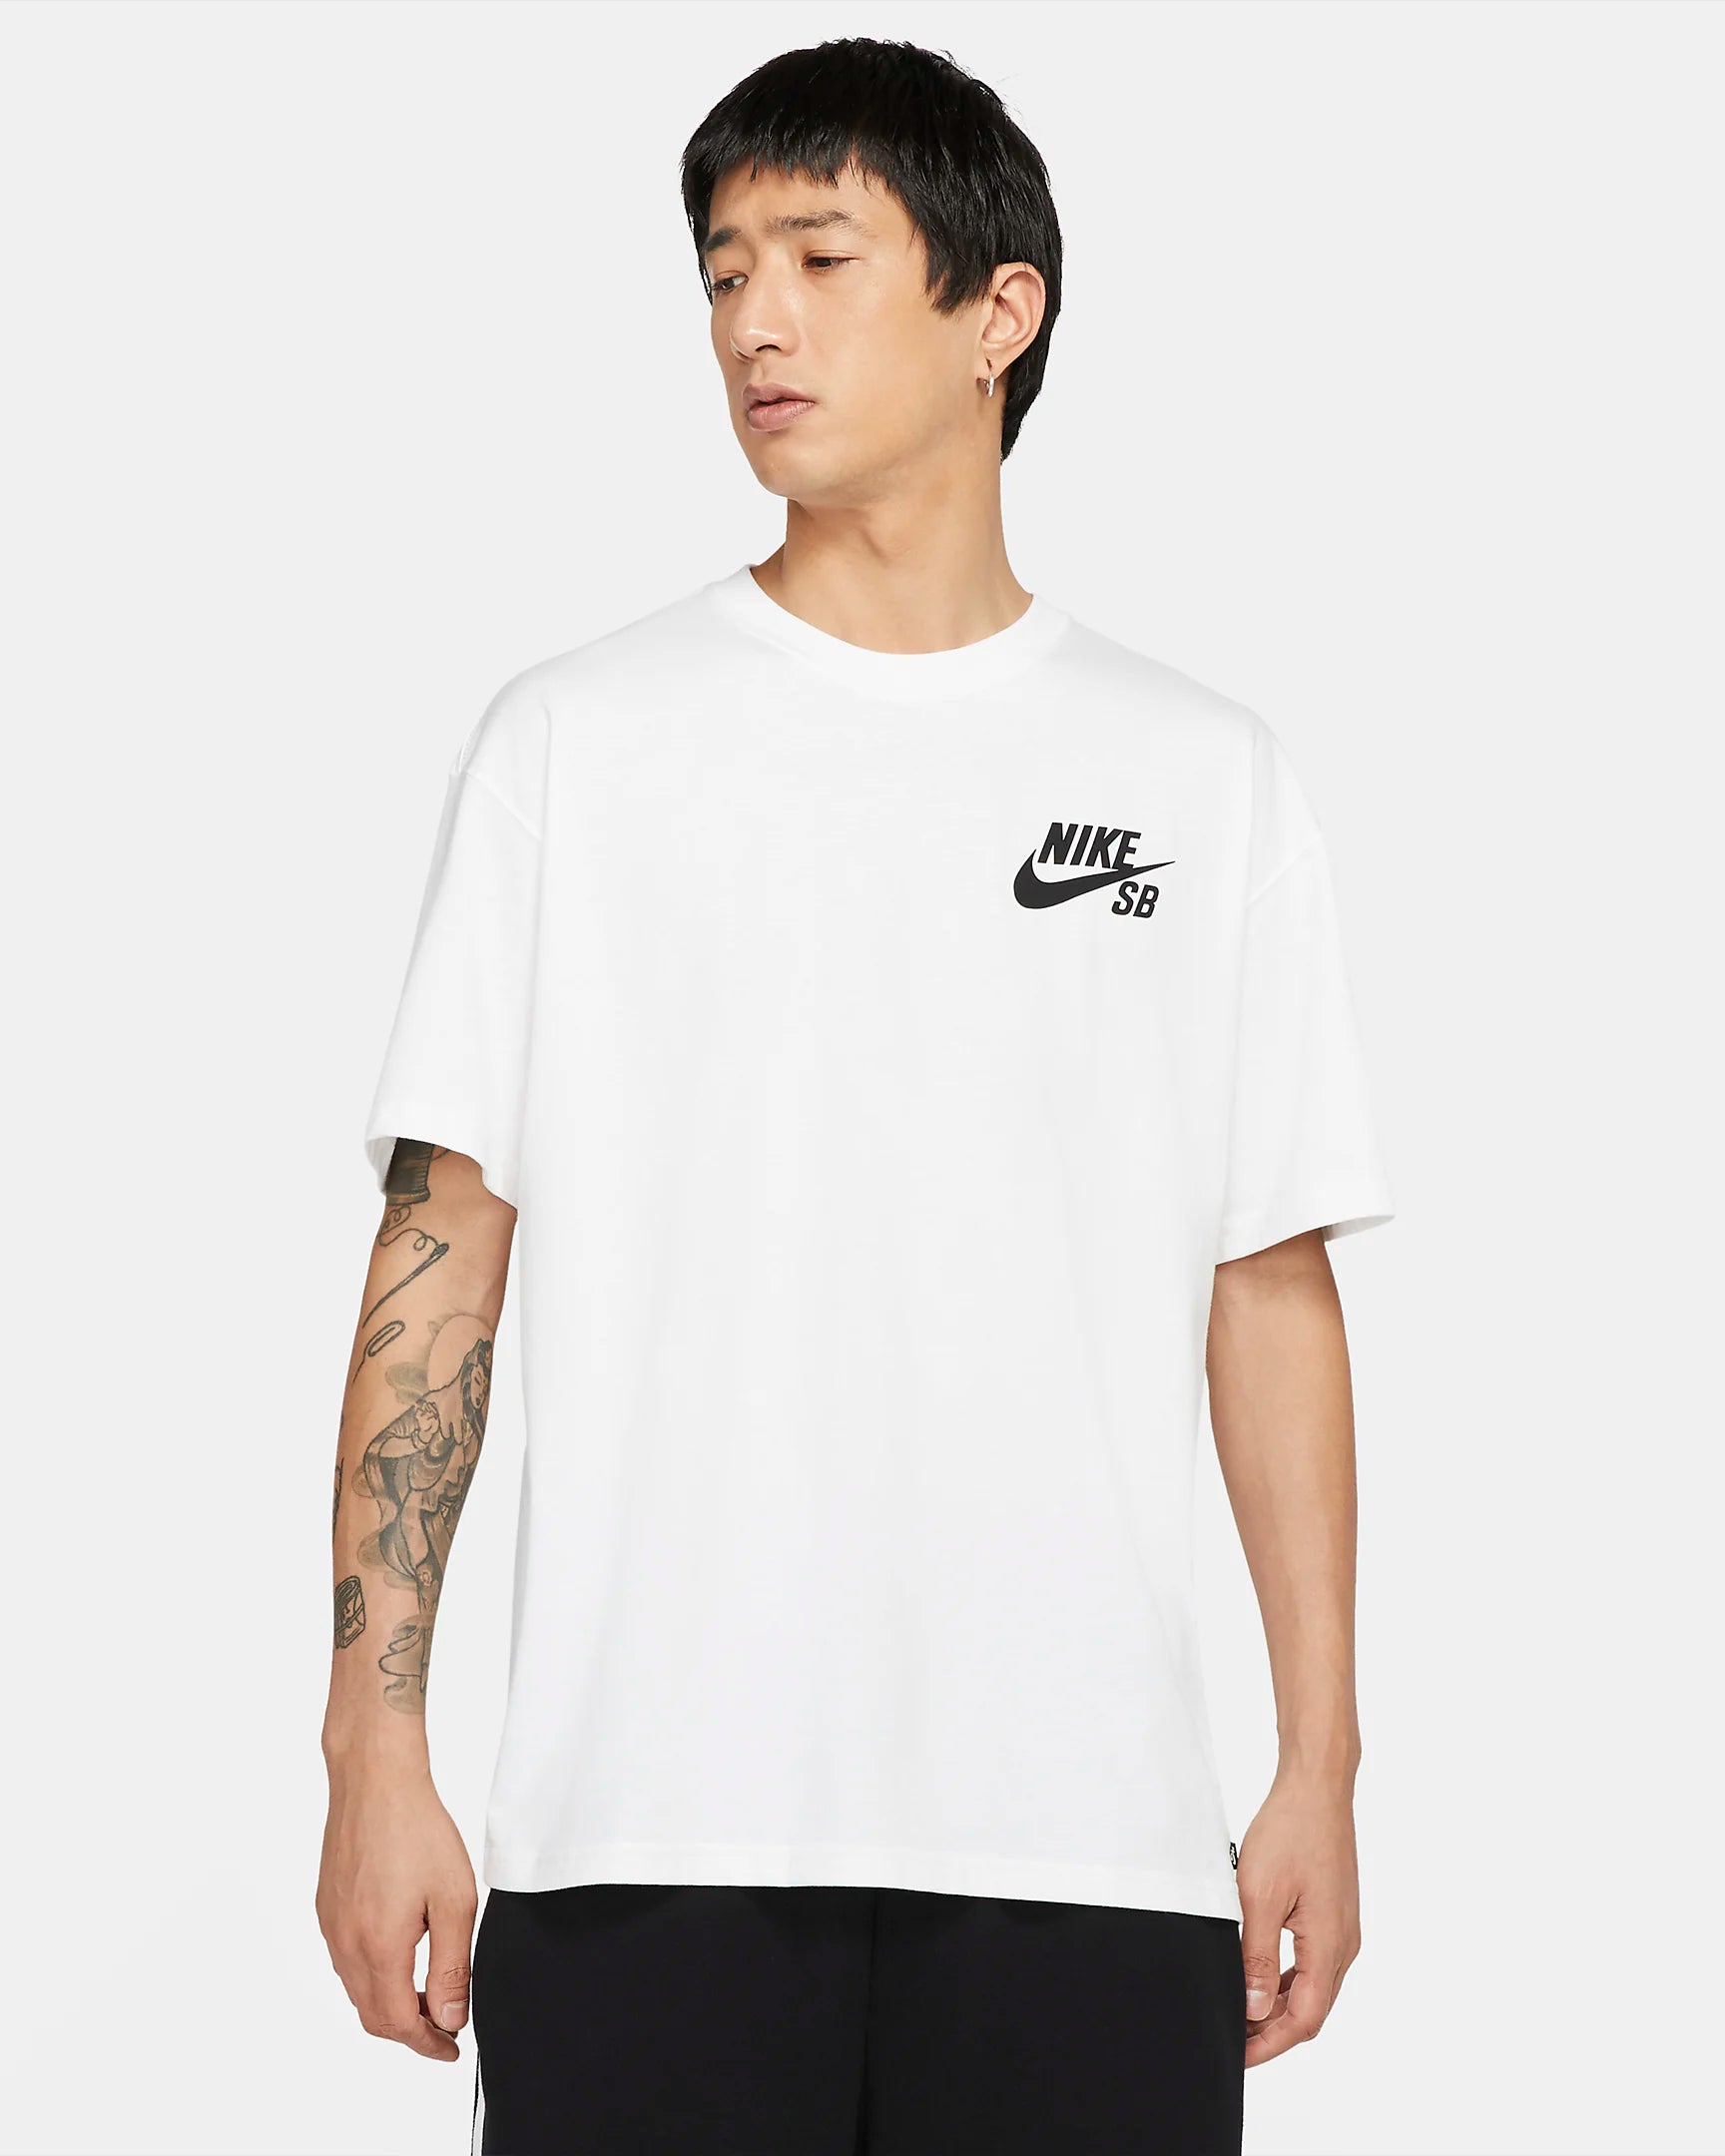 Nike SB Logo Tee - White/Black